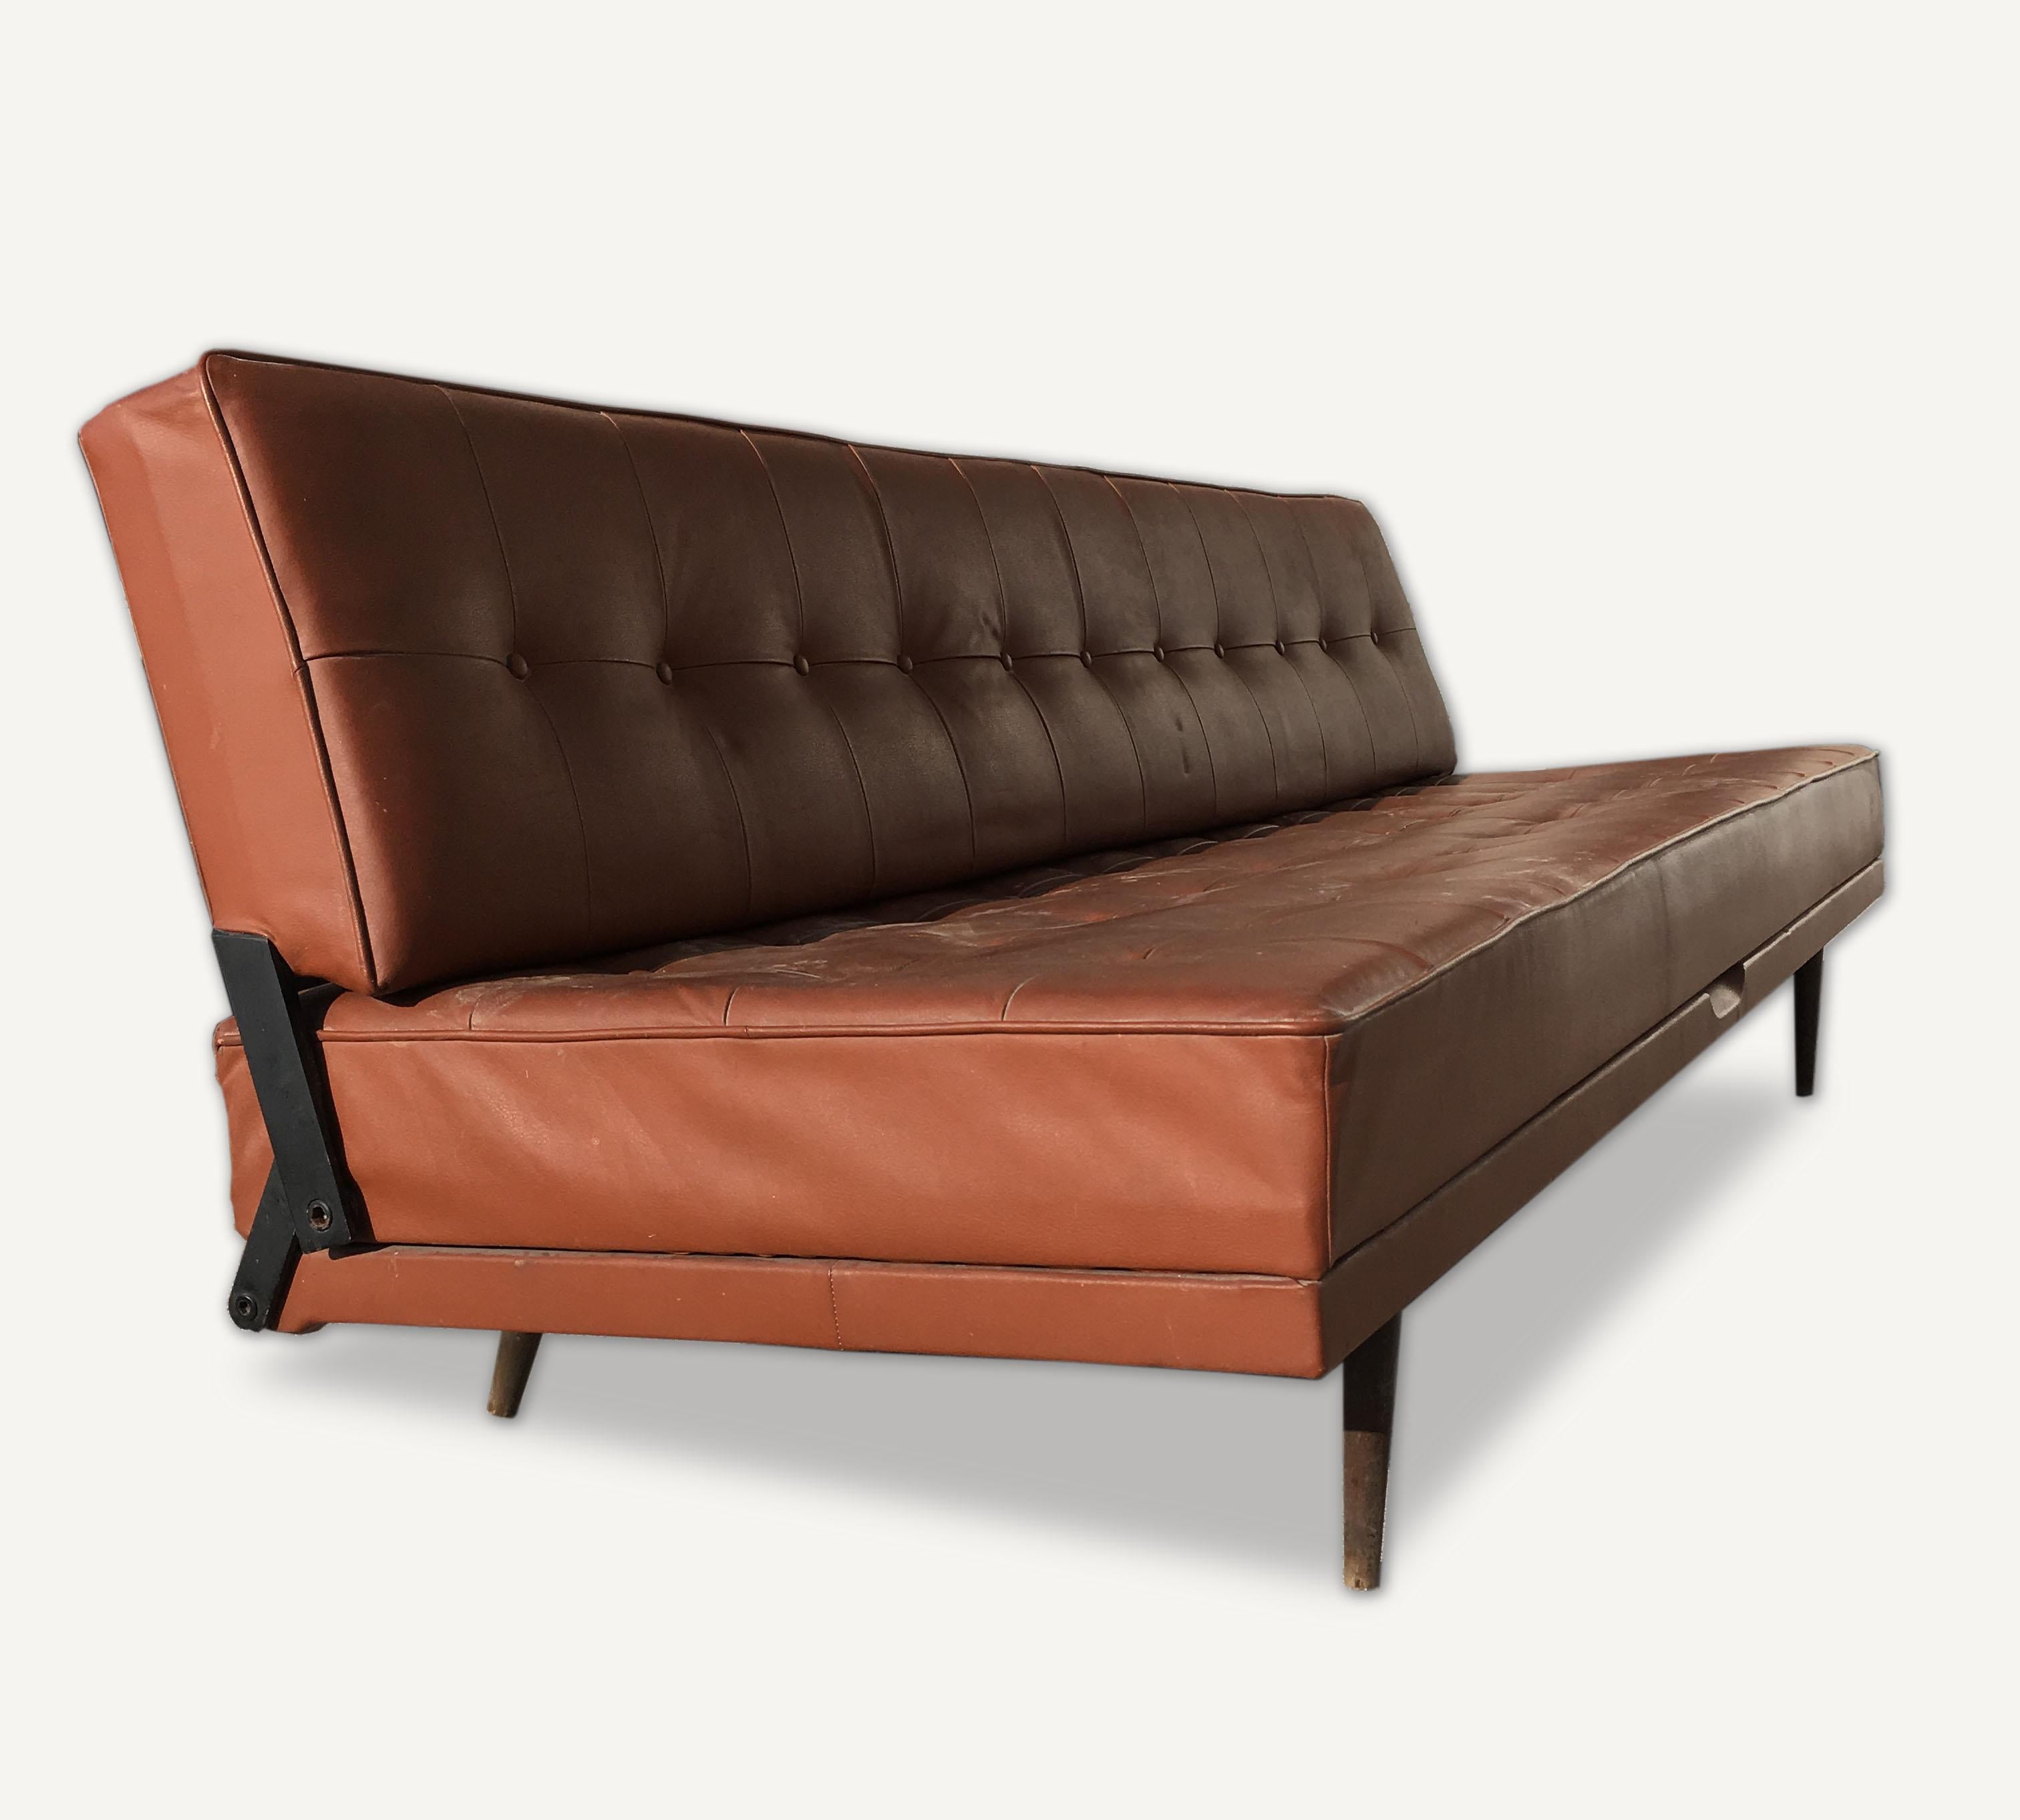 Johannes Spalt Convertible Daybed Sofa 'Constanze', Patinated Cognac Leather, Austria, 1960s